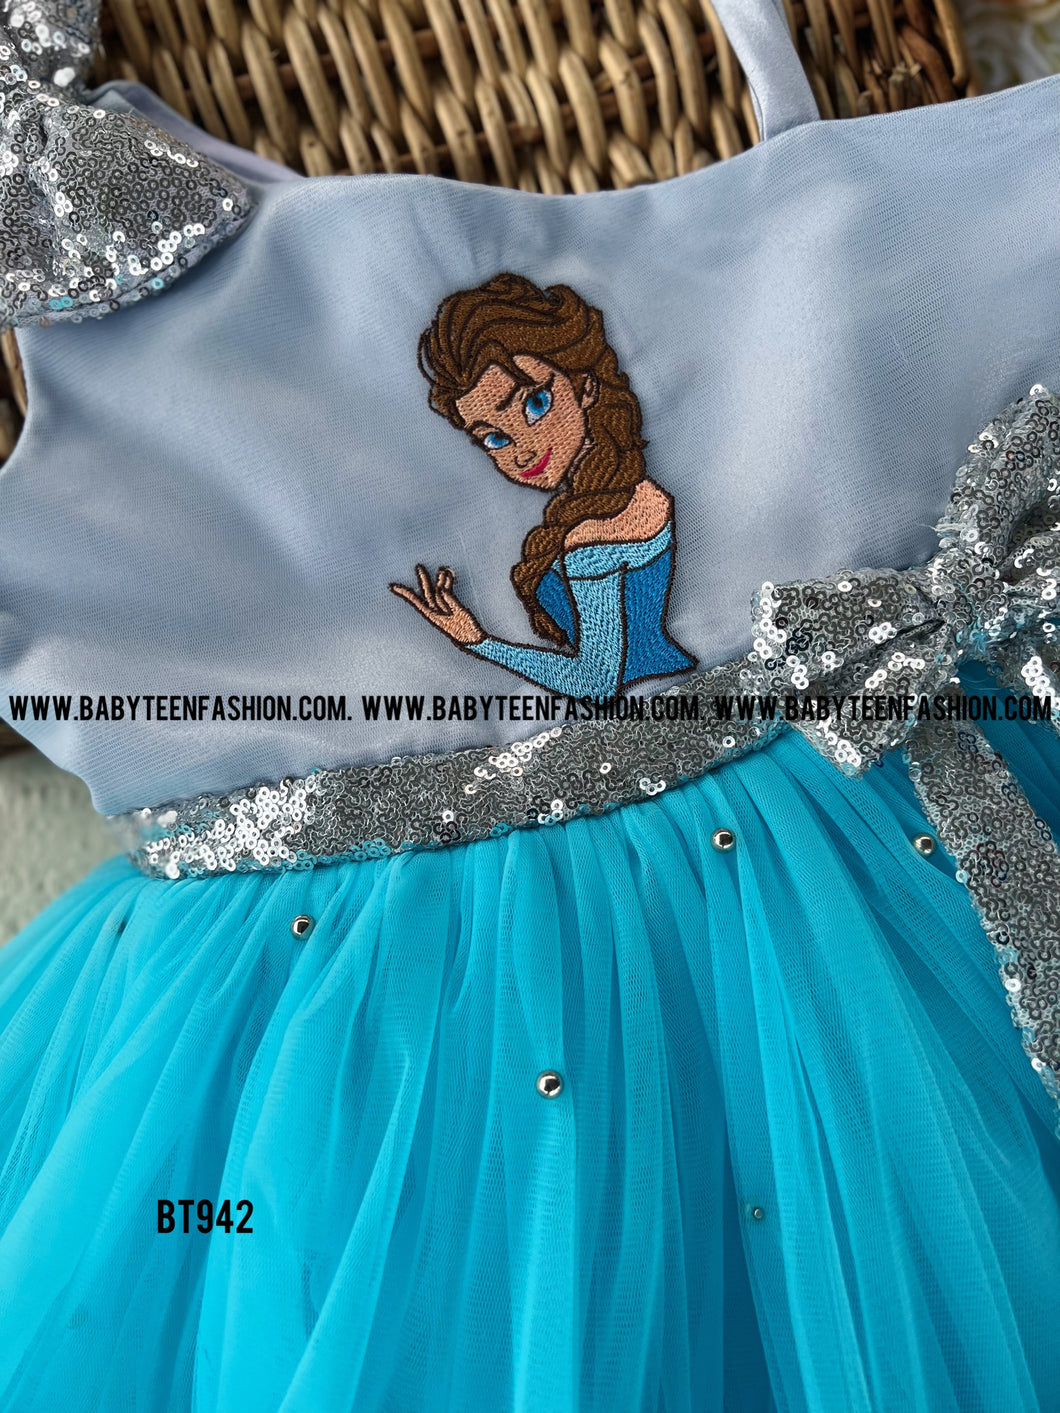 BT942 Princess Elsa Embossed Frozen Theme Frock